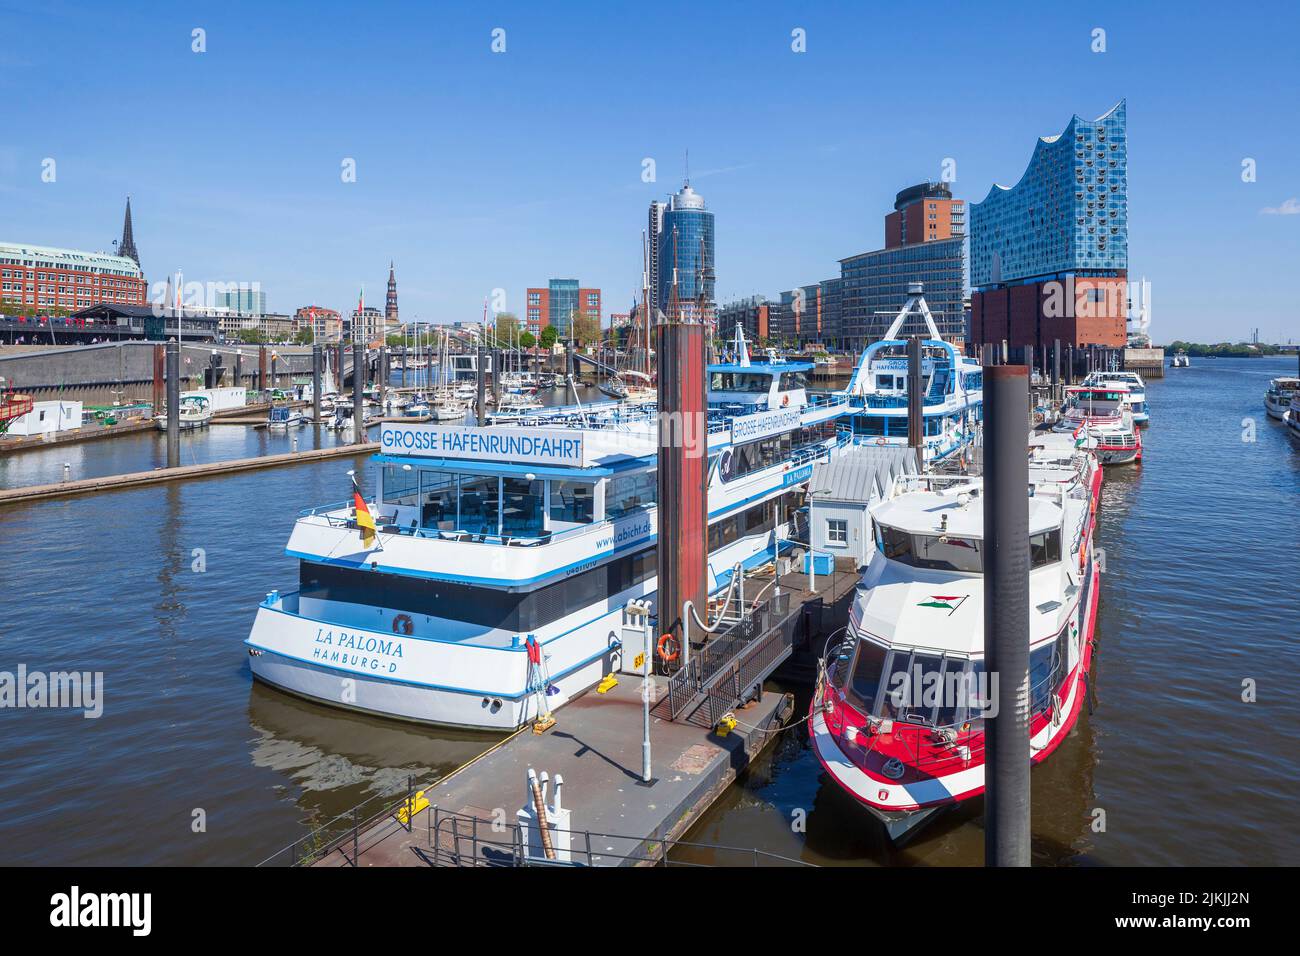 Lower harbor with ships, Elbphilharmonie, Hanseatic Trade Center (HDC), Hafencity, Hamburg, Germany, Europe Stock Photo